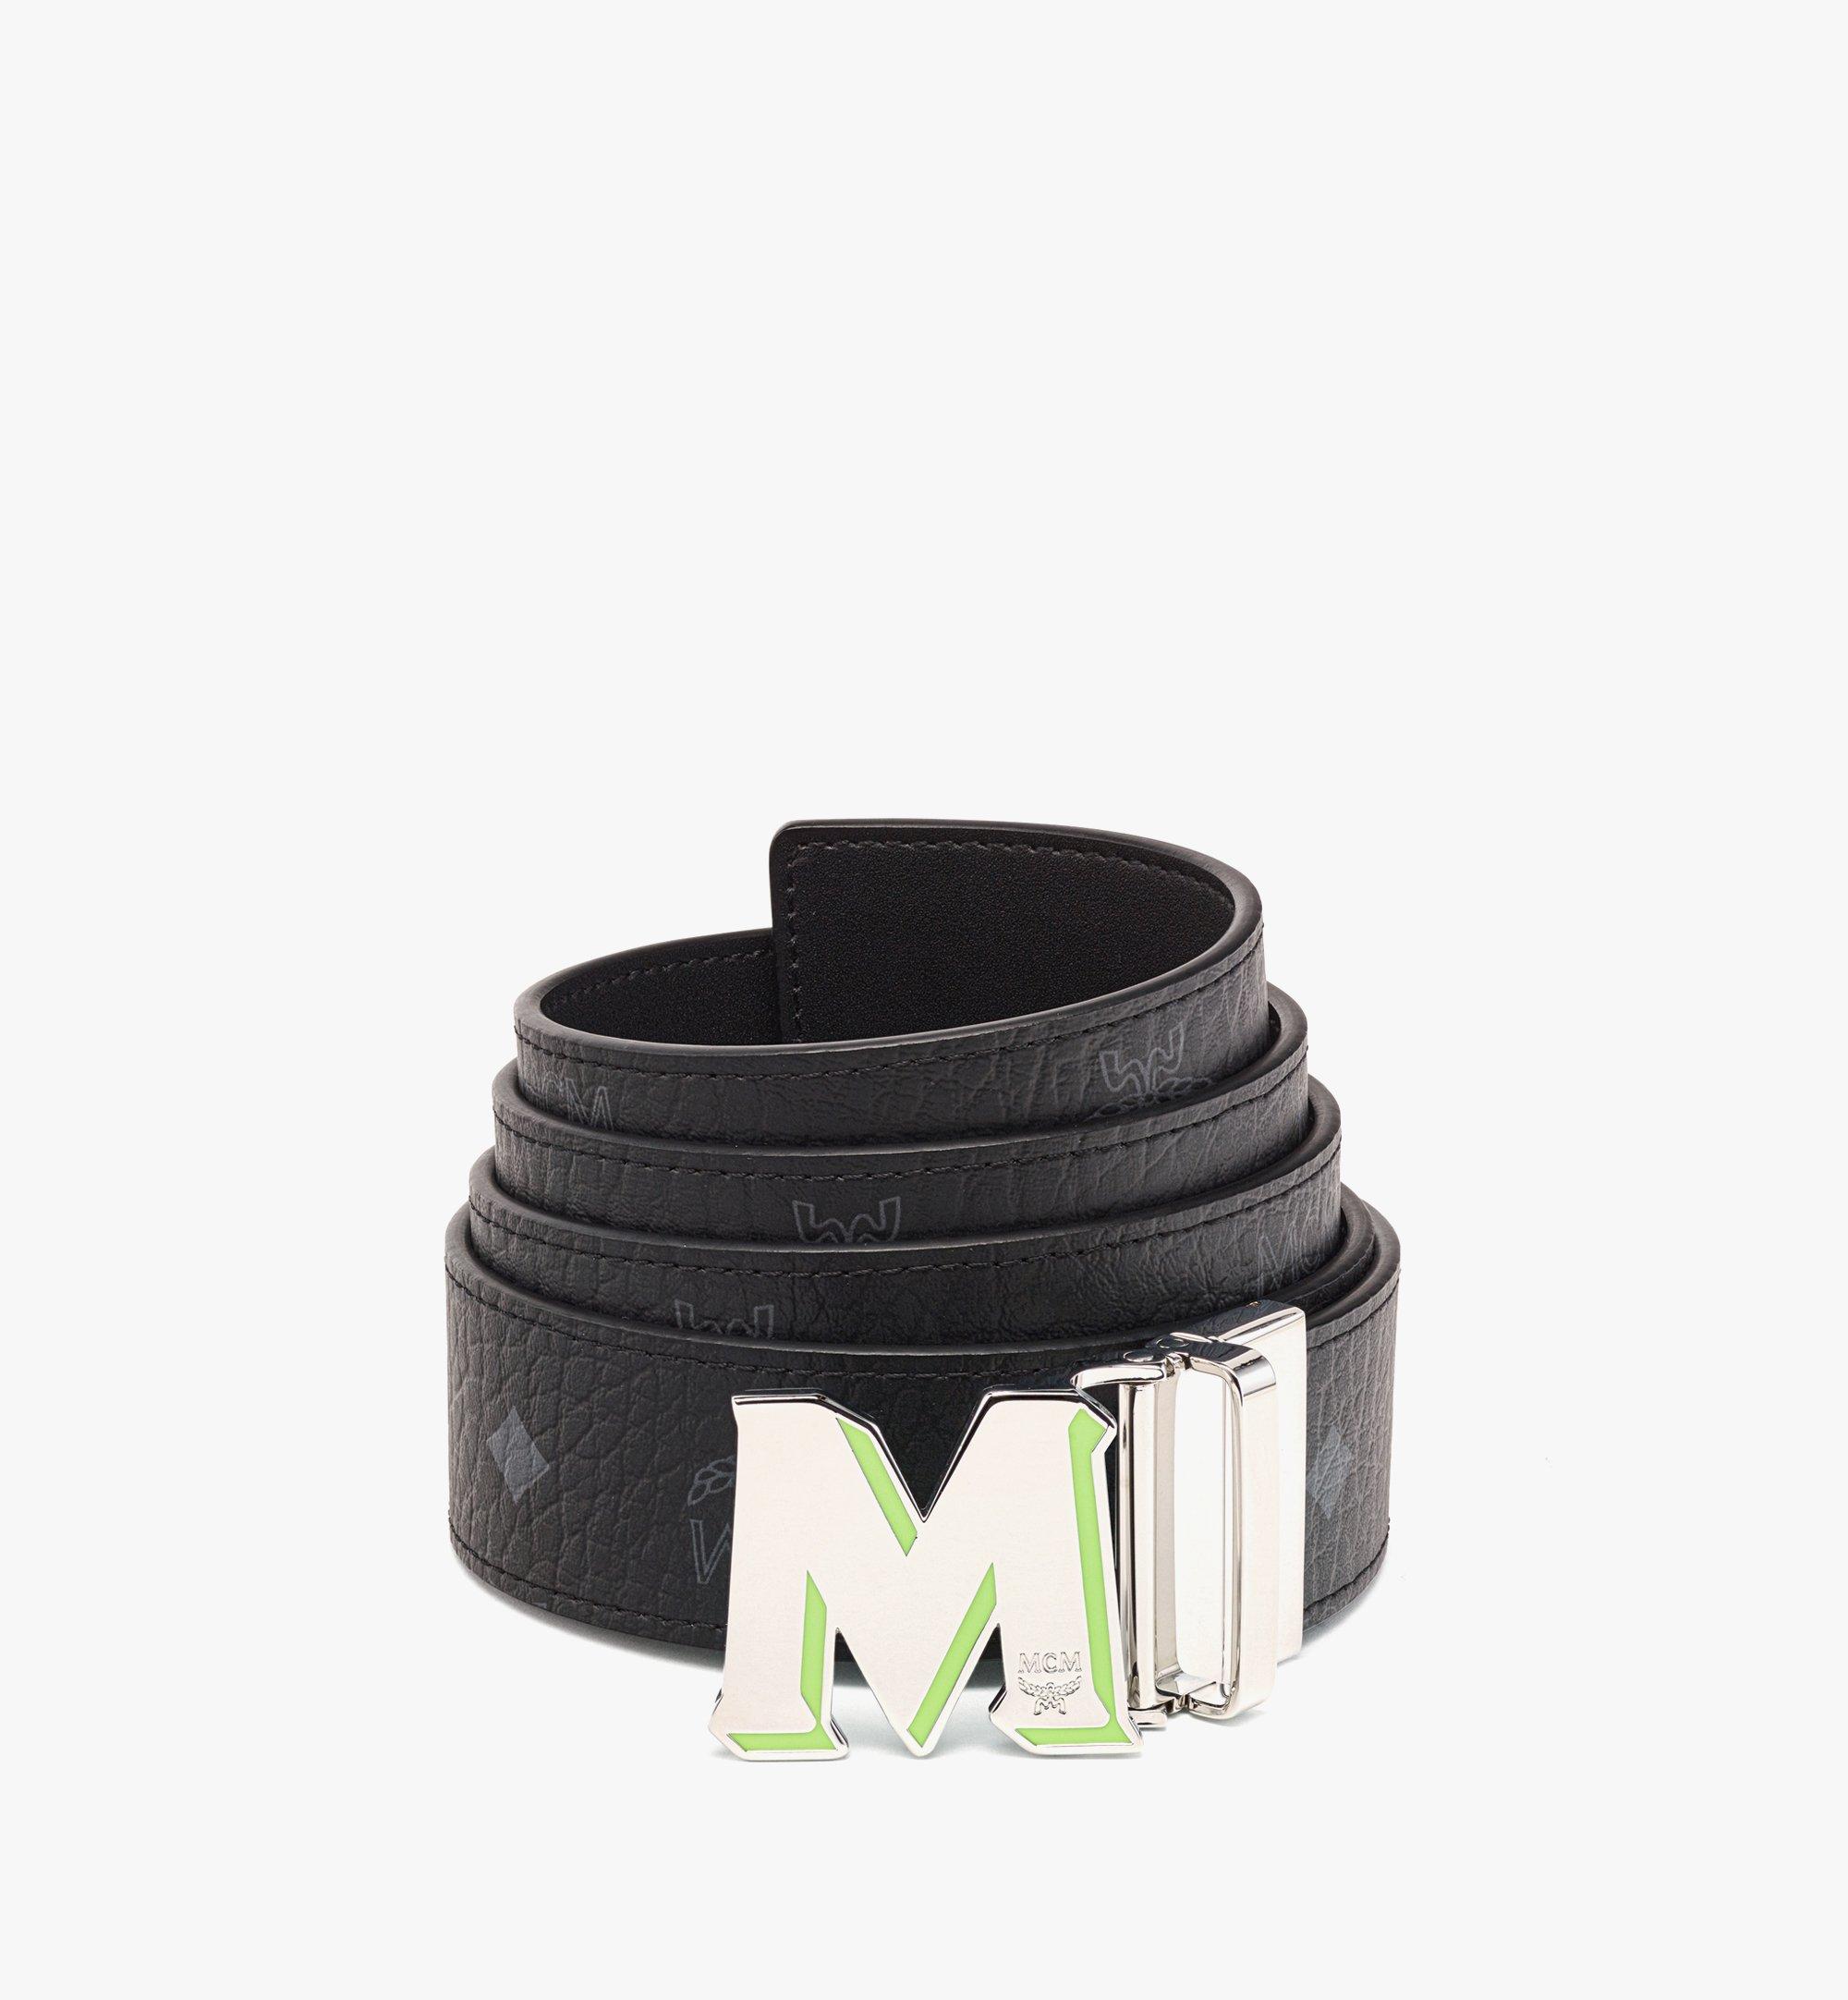 MCM authentic thin Leather belt,dark blue(almost black)